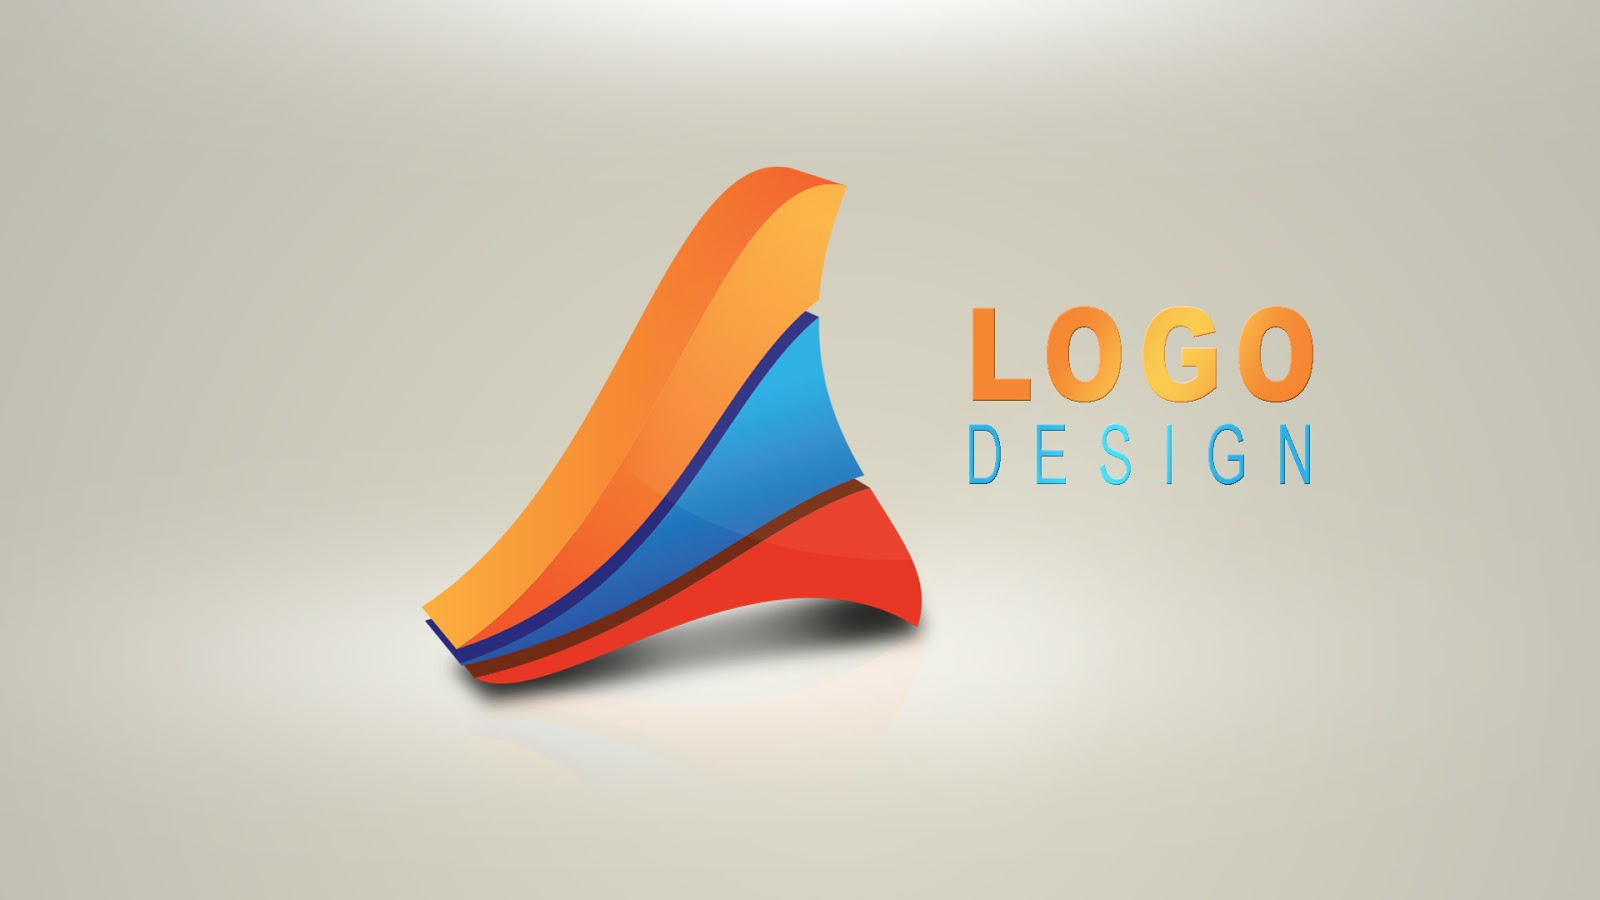 3d Logo Design Illustrator Photoshop Tutorial In Hindi Urdu Hd